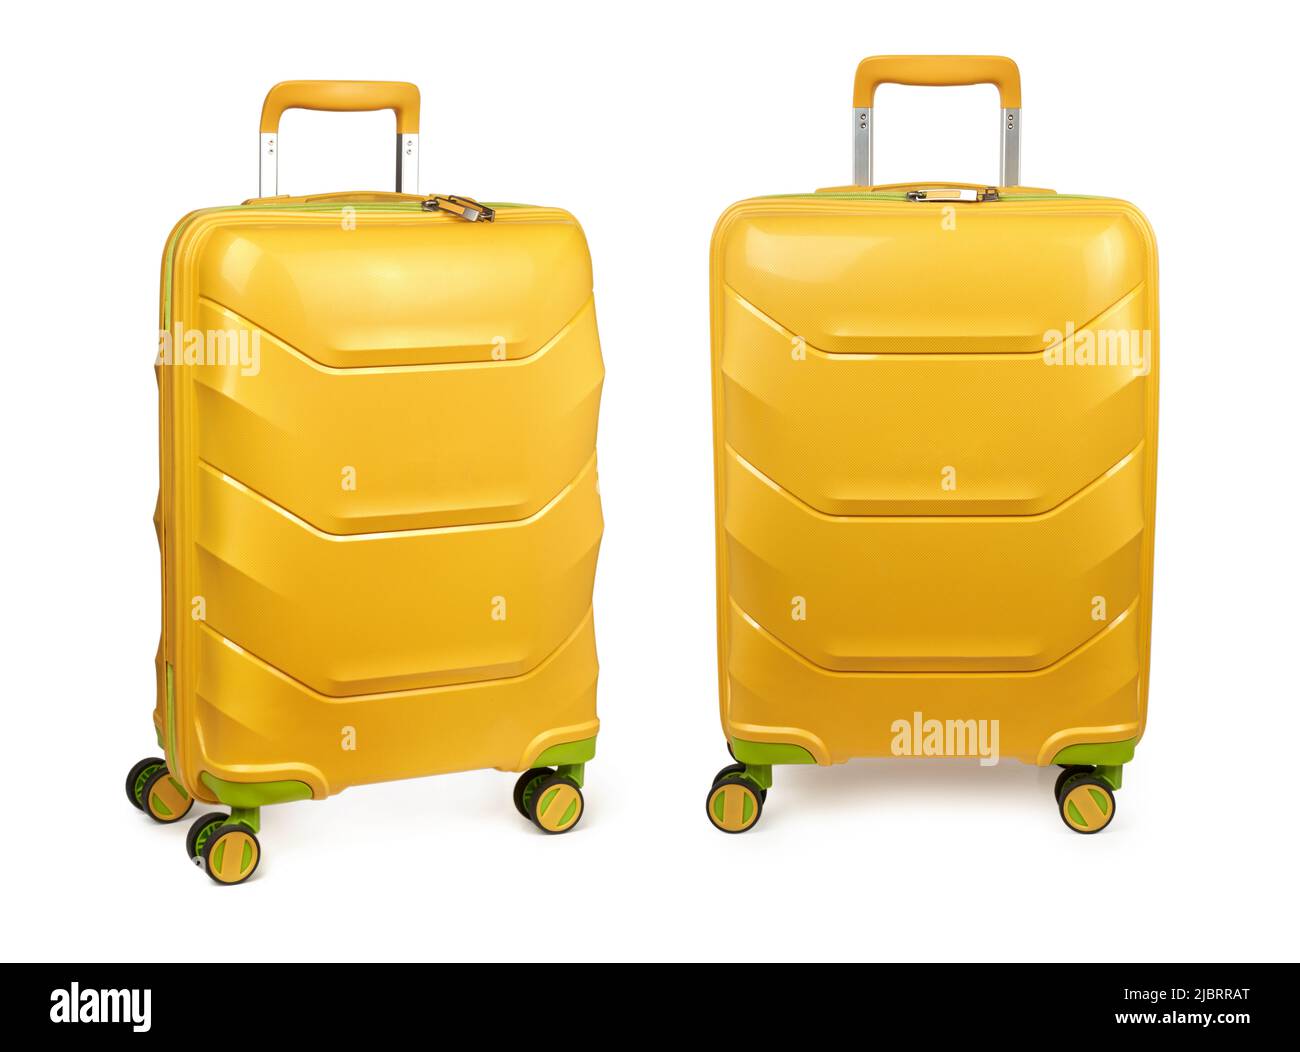 Set di due valigie. Valigie gialle isolate su sfondo bianco Foto Stock